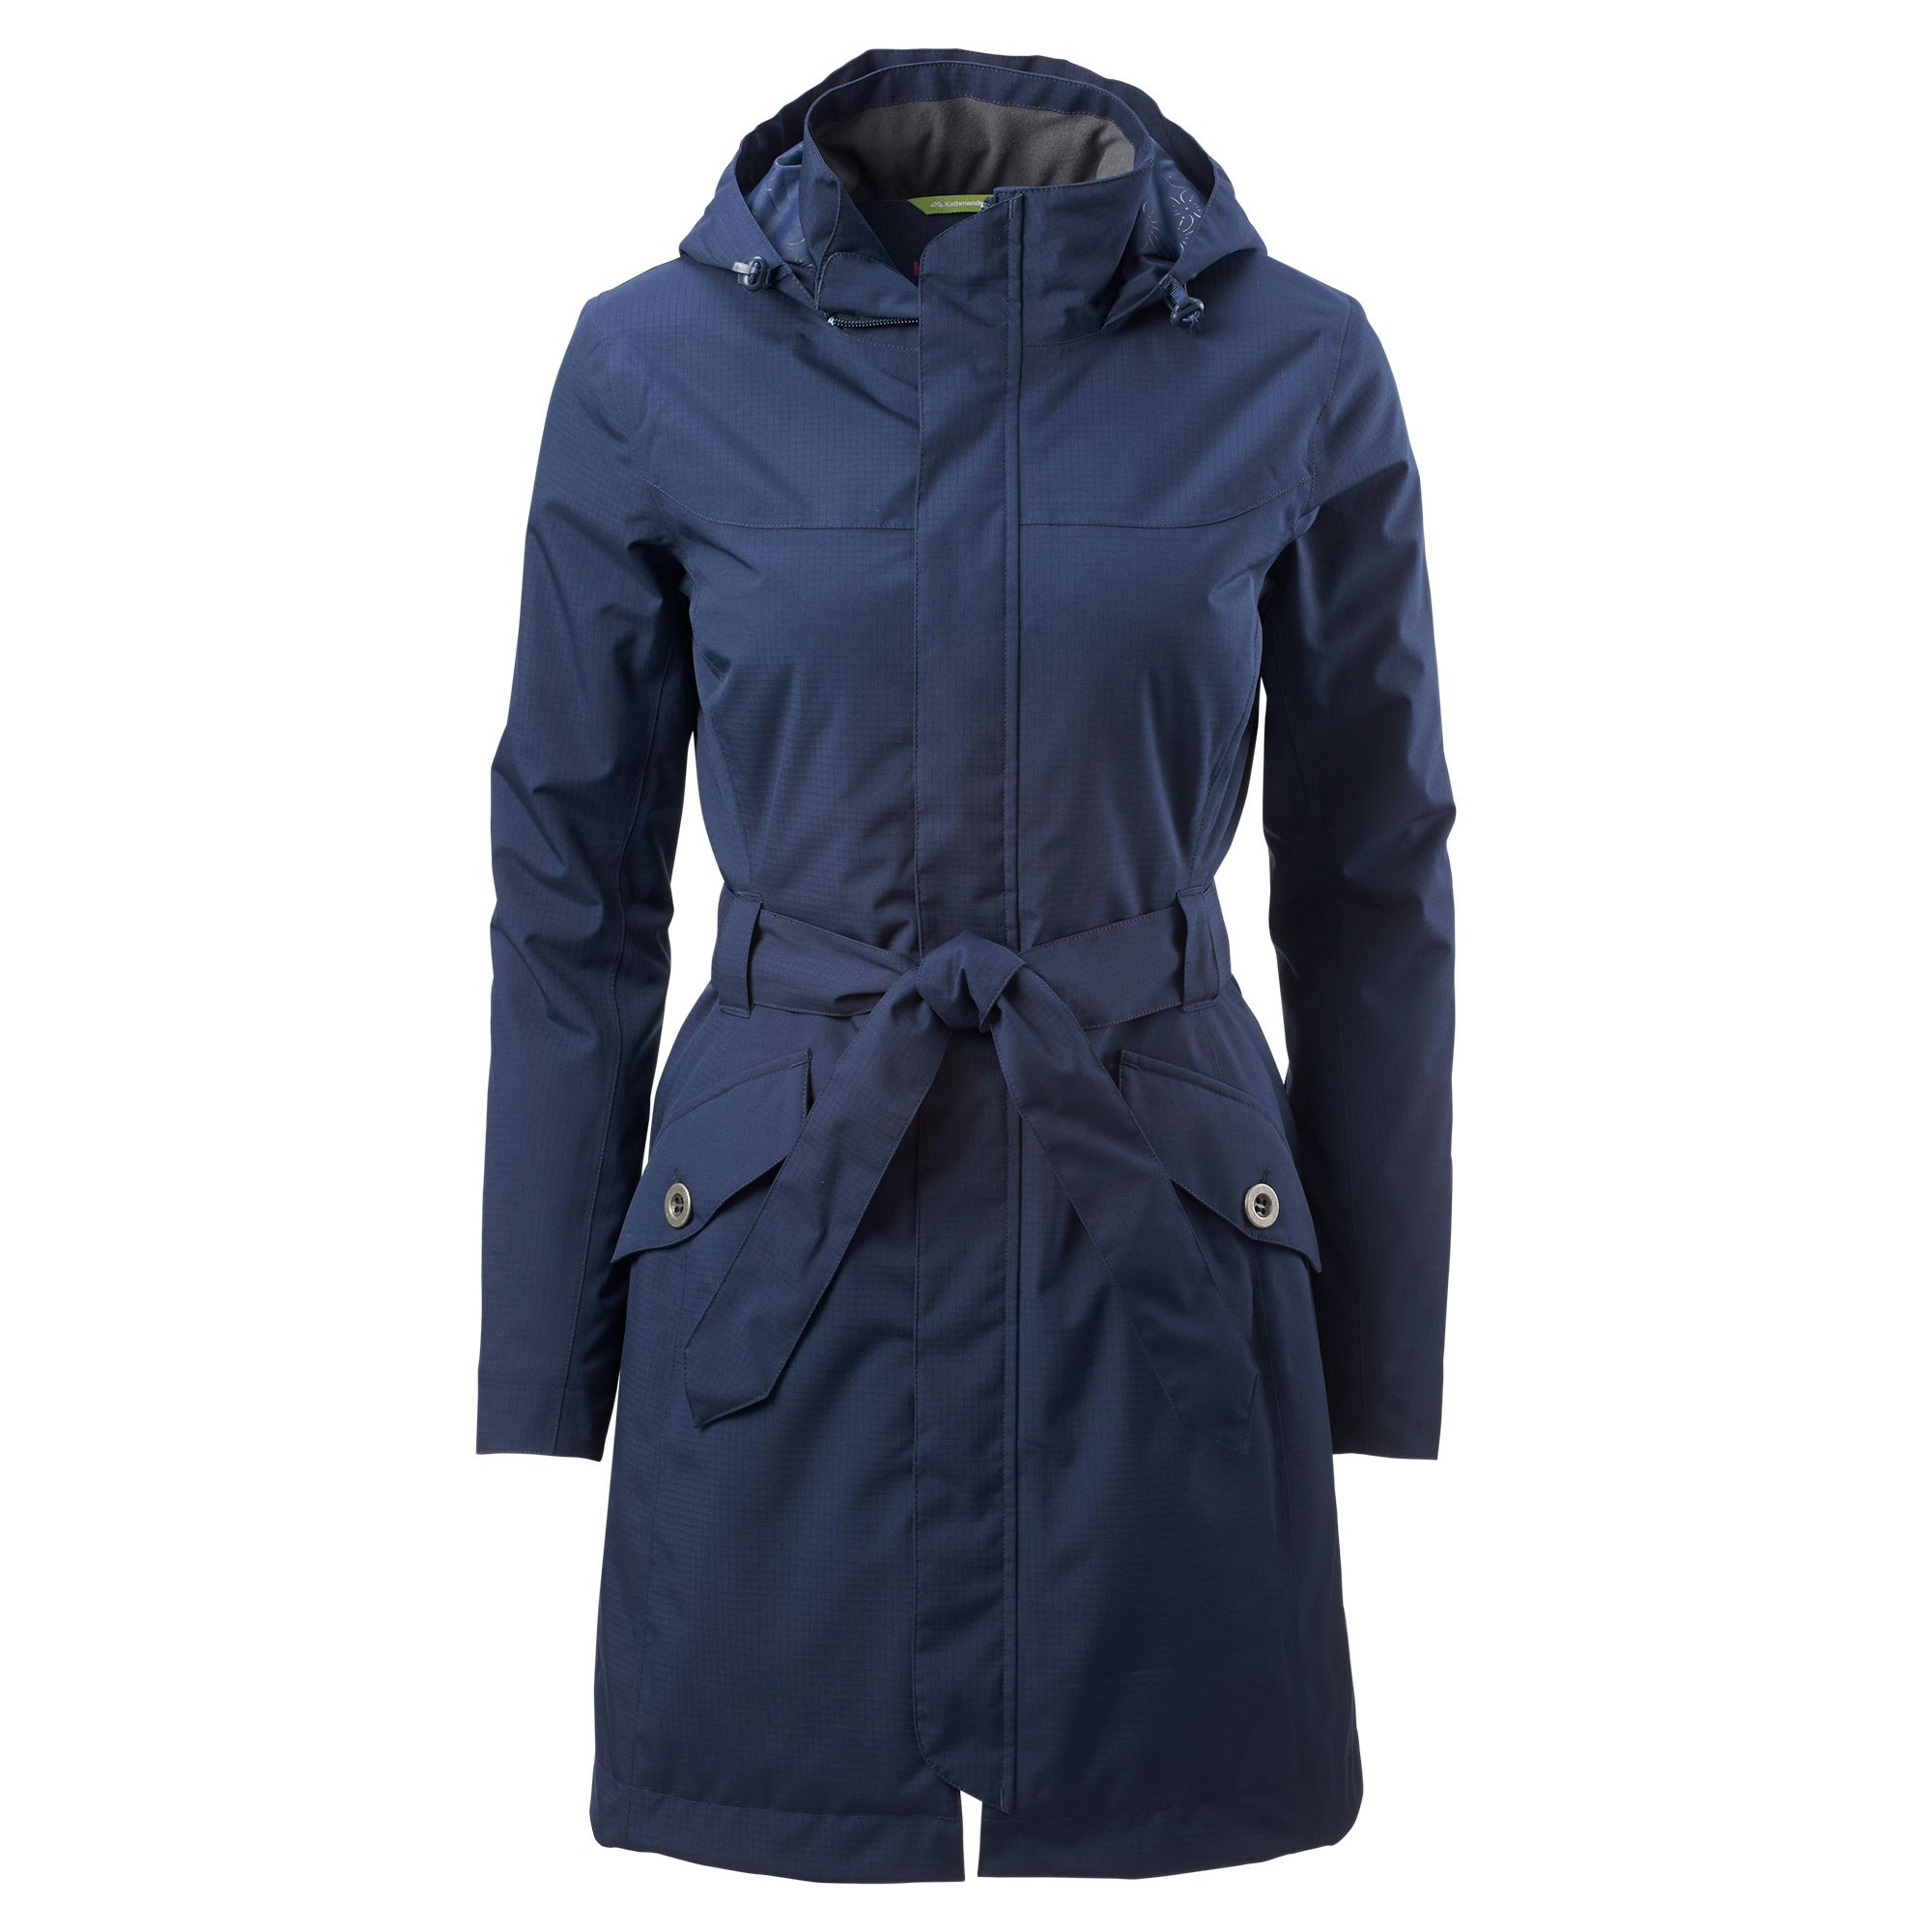 Kathmandu Percell Women's Waterproof Jacket Insulated Long Length Trench Coat v3 | eBay